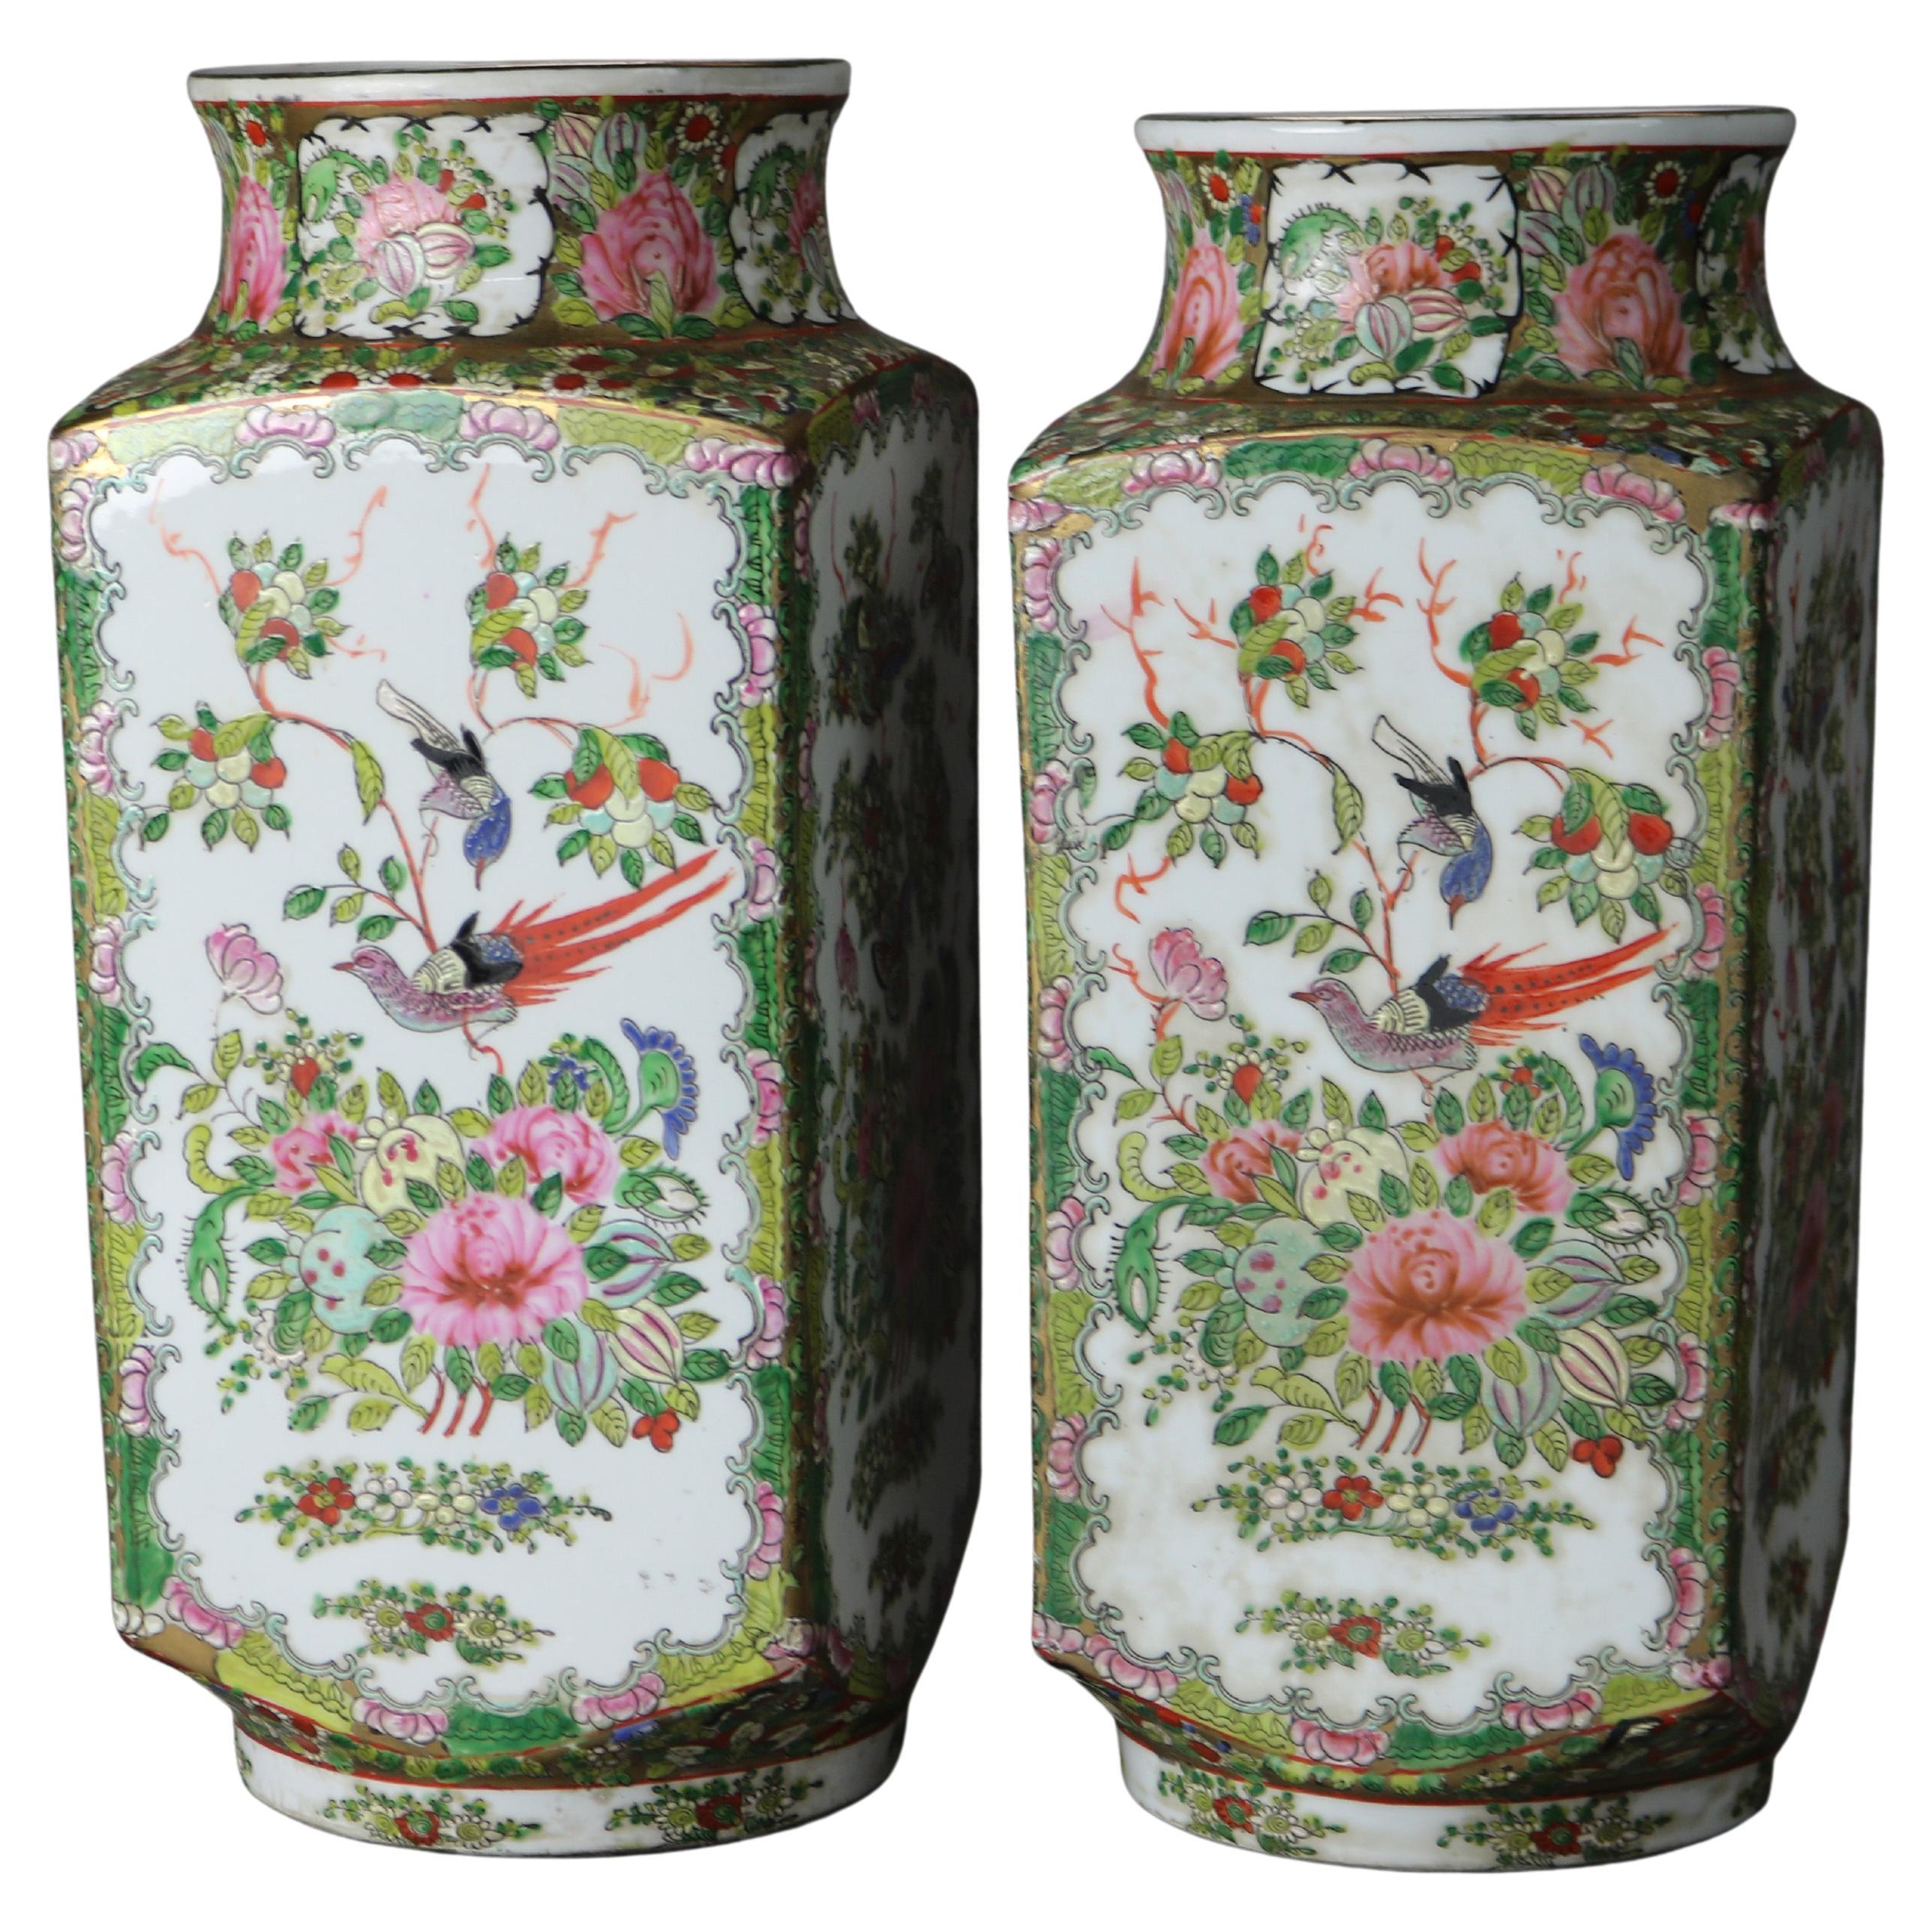 Pair of Chinese Porcelain Vases, Garden& Birds, 20th Century